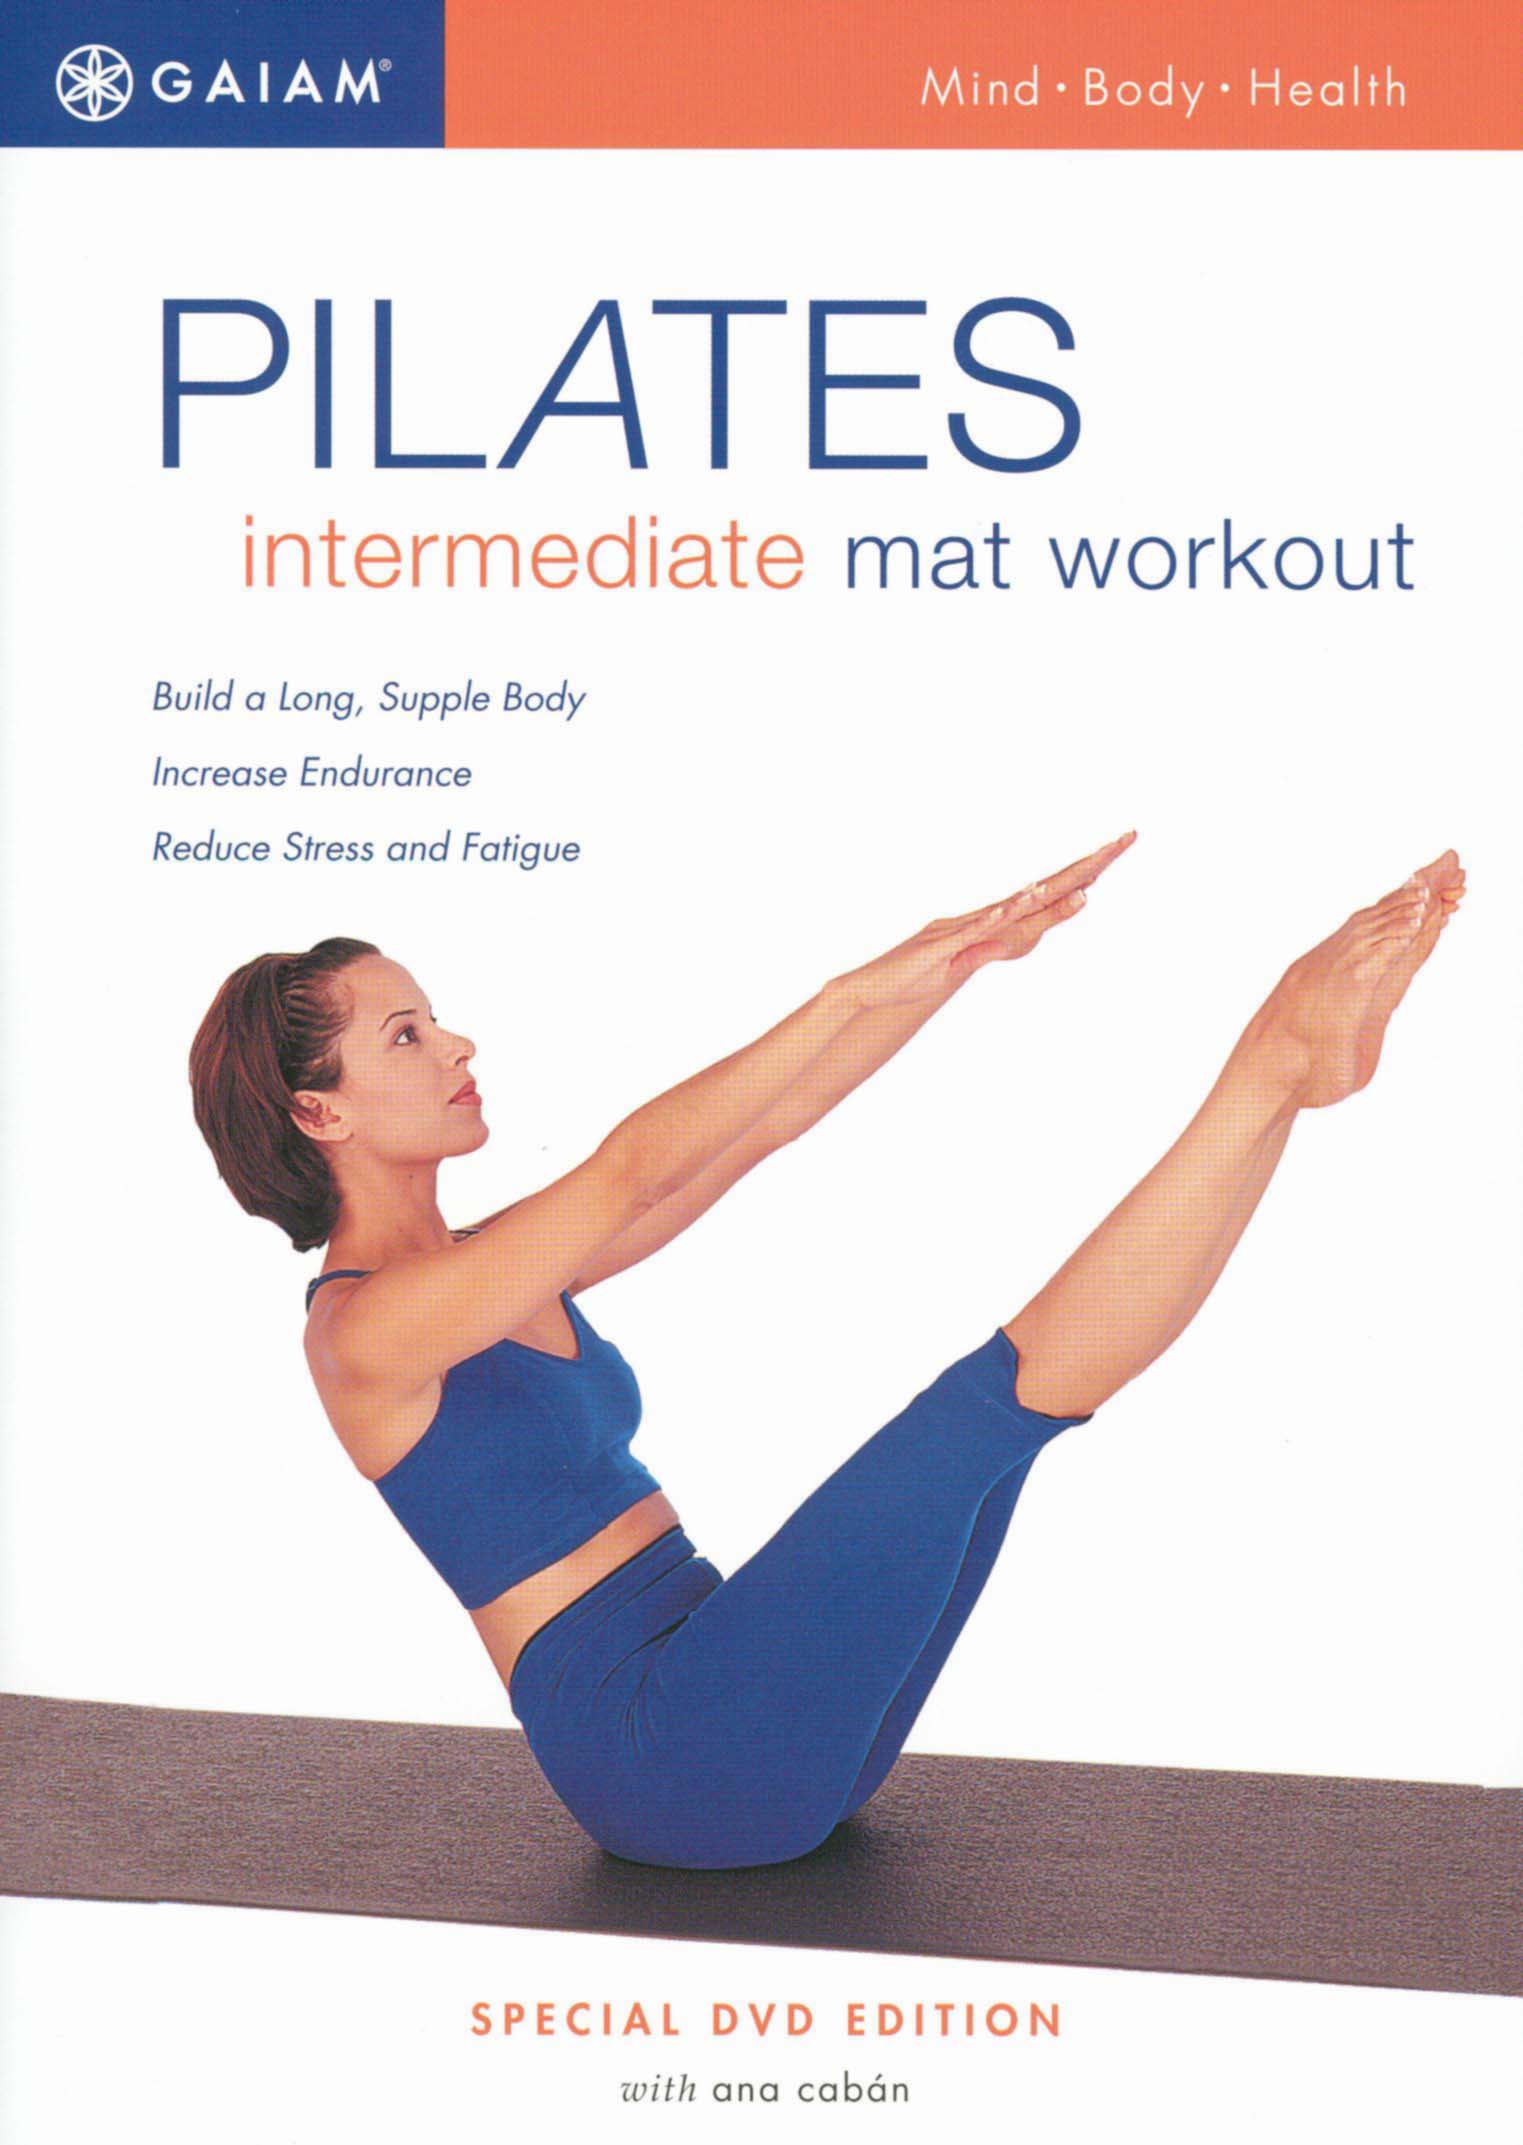 Intermediate Pilates Mat: Whole Body Conditioning Yoga DVD